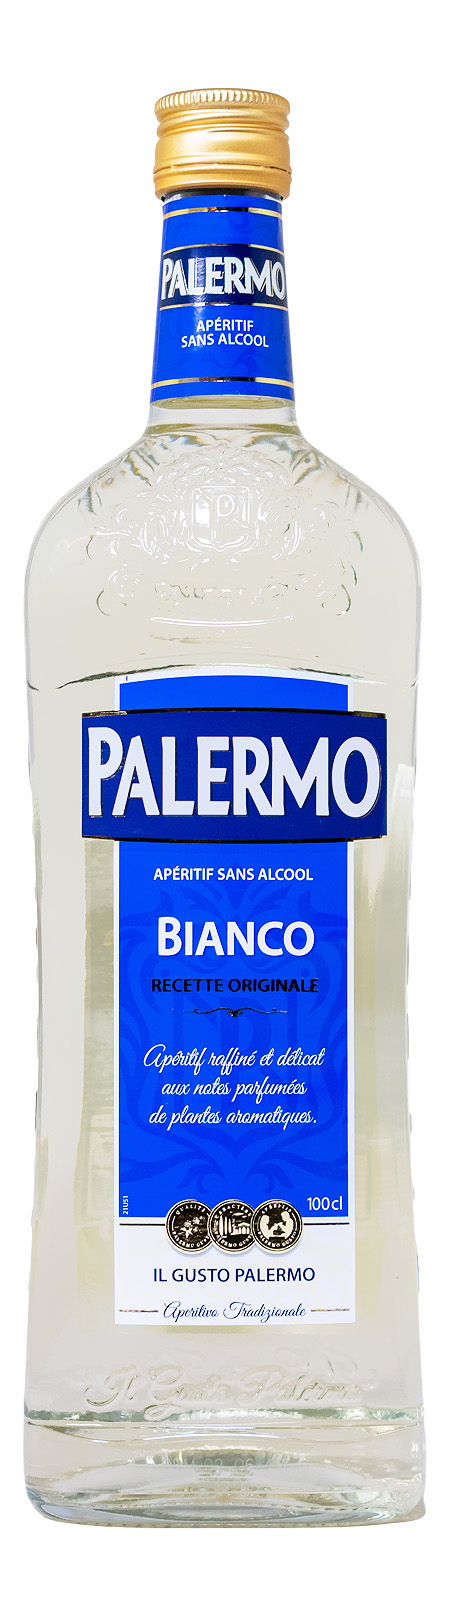 Palermo Bianco Aperitif ohne Alkohol - 1 Liter